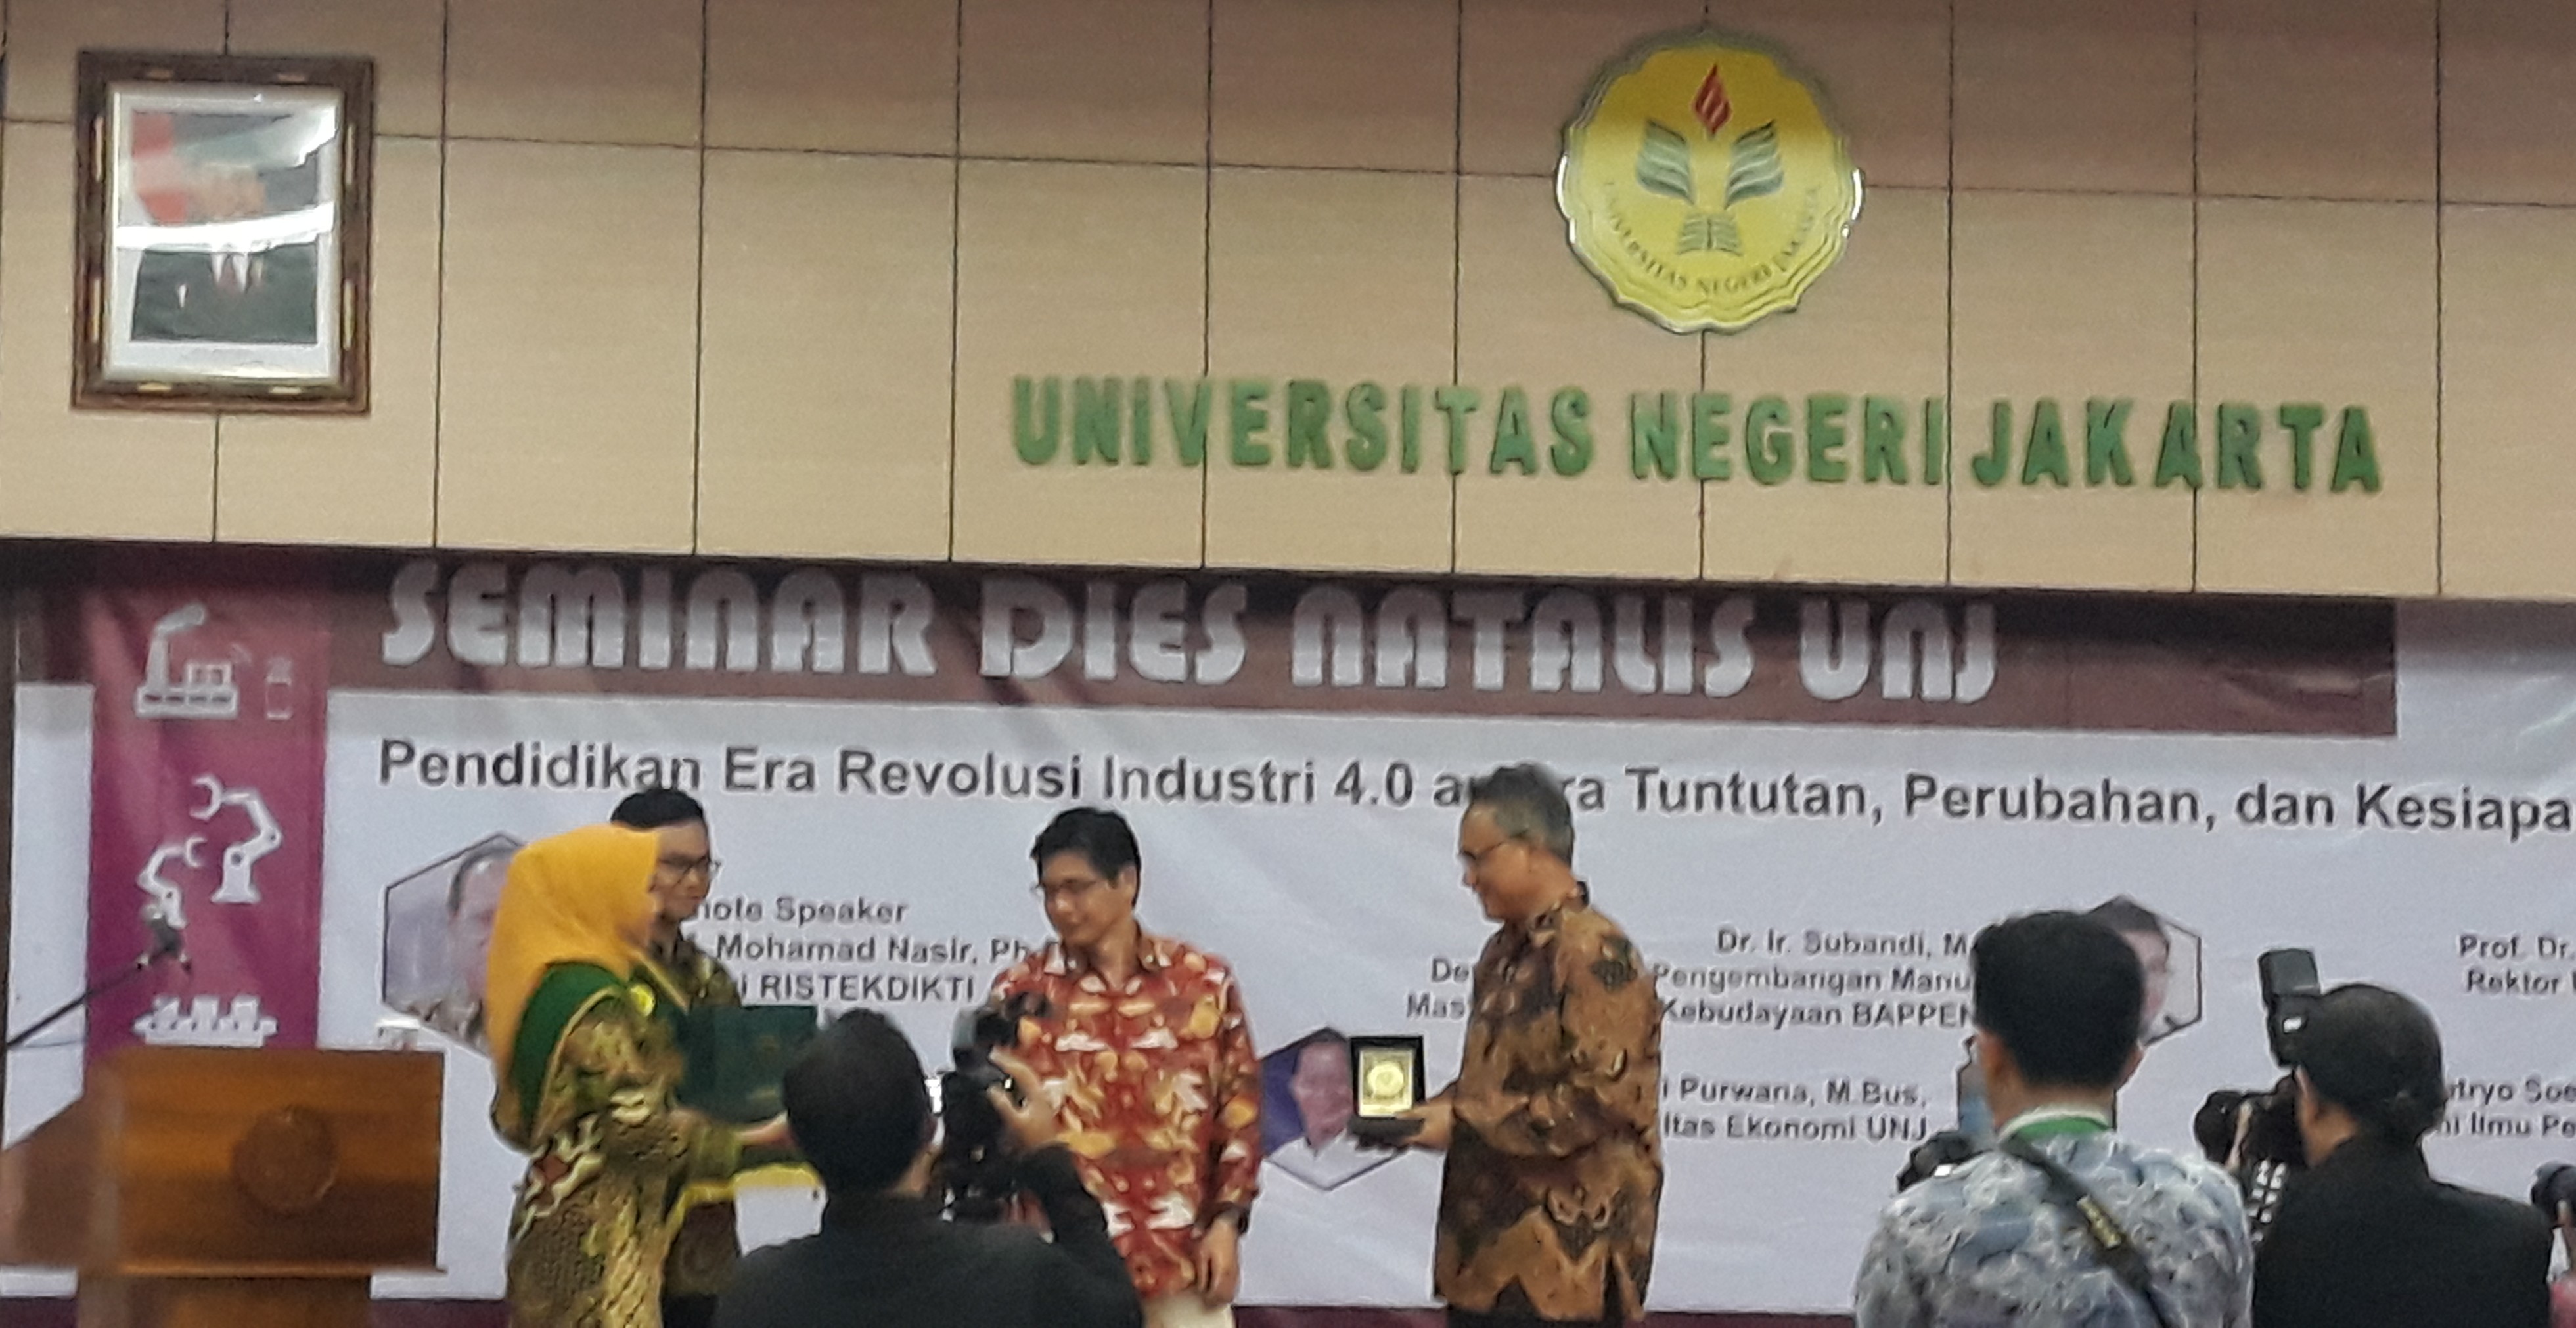 Seminar Dies Natalis ke-55 Universitas Negeri Jakarta  Pendidikan Era Revolusi Industri 4.0 antara Tuntutan, Perubahan, dan Kesiapan